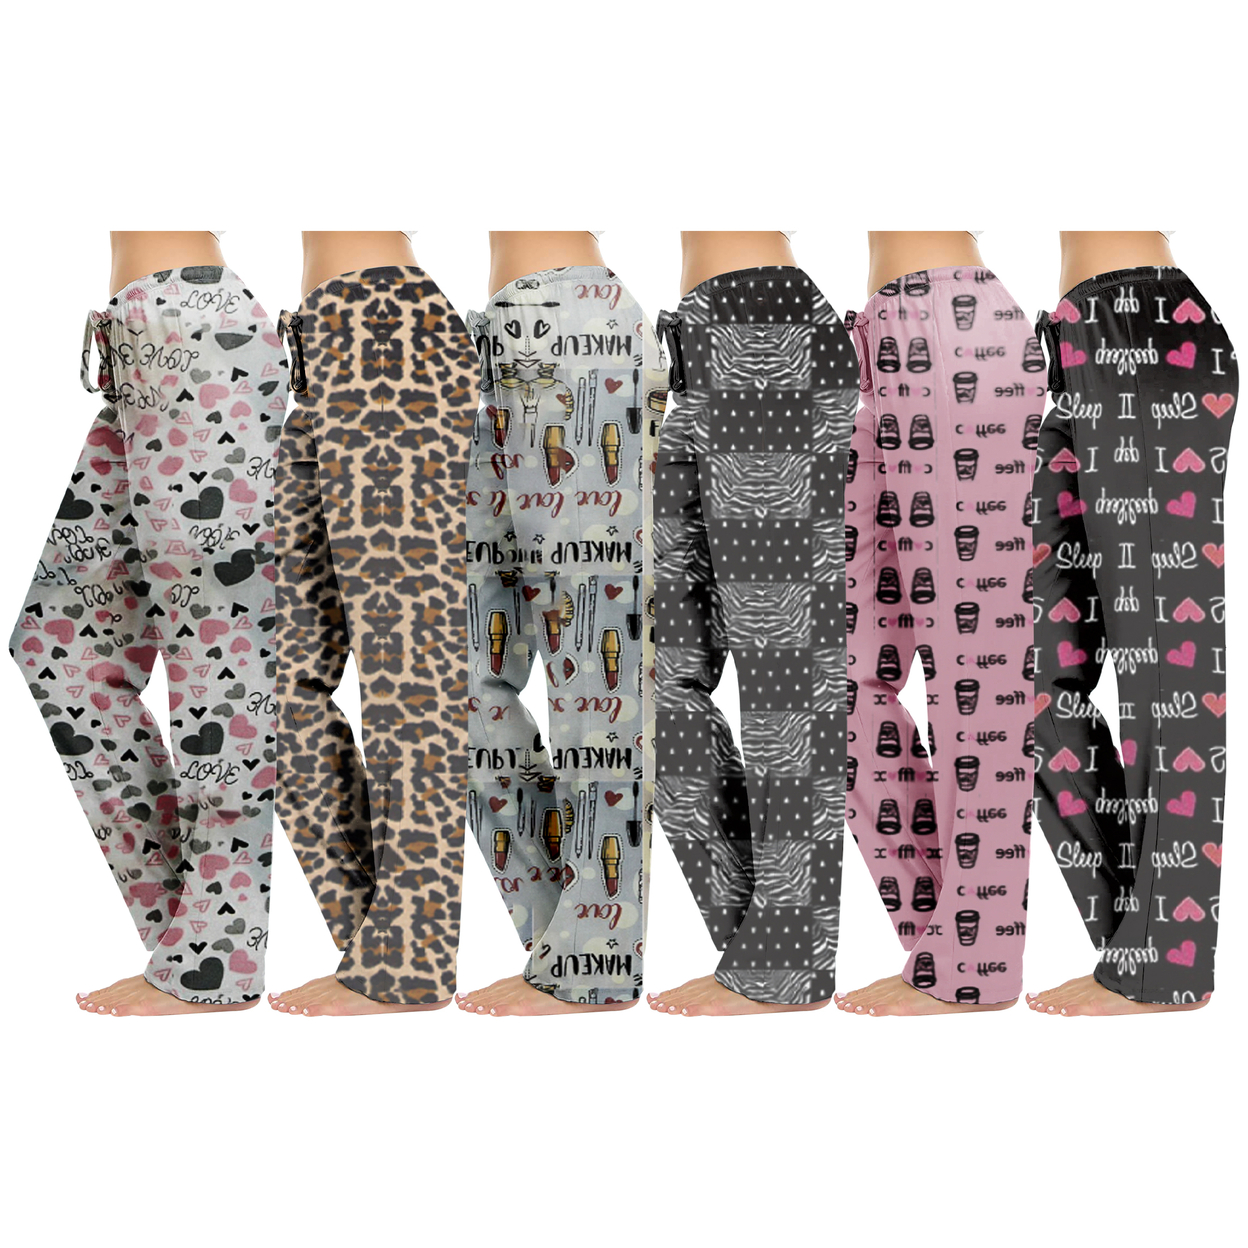 2-Pack: Women's Casual Fun Printed Lightweight Lounge Terry Knit Pajama Bottom Pants - Medium, Love